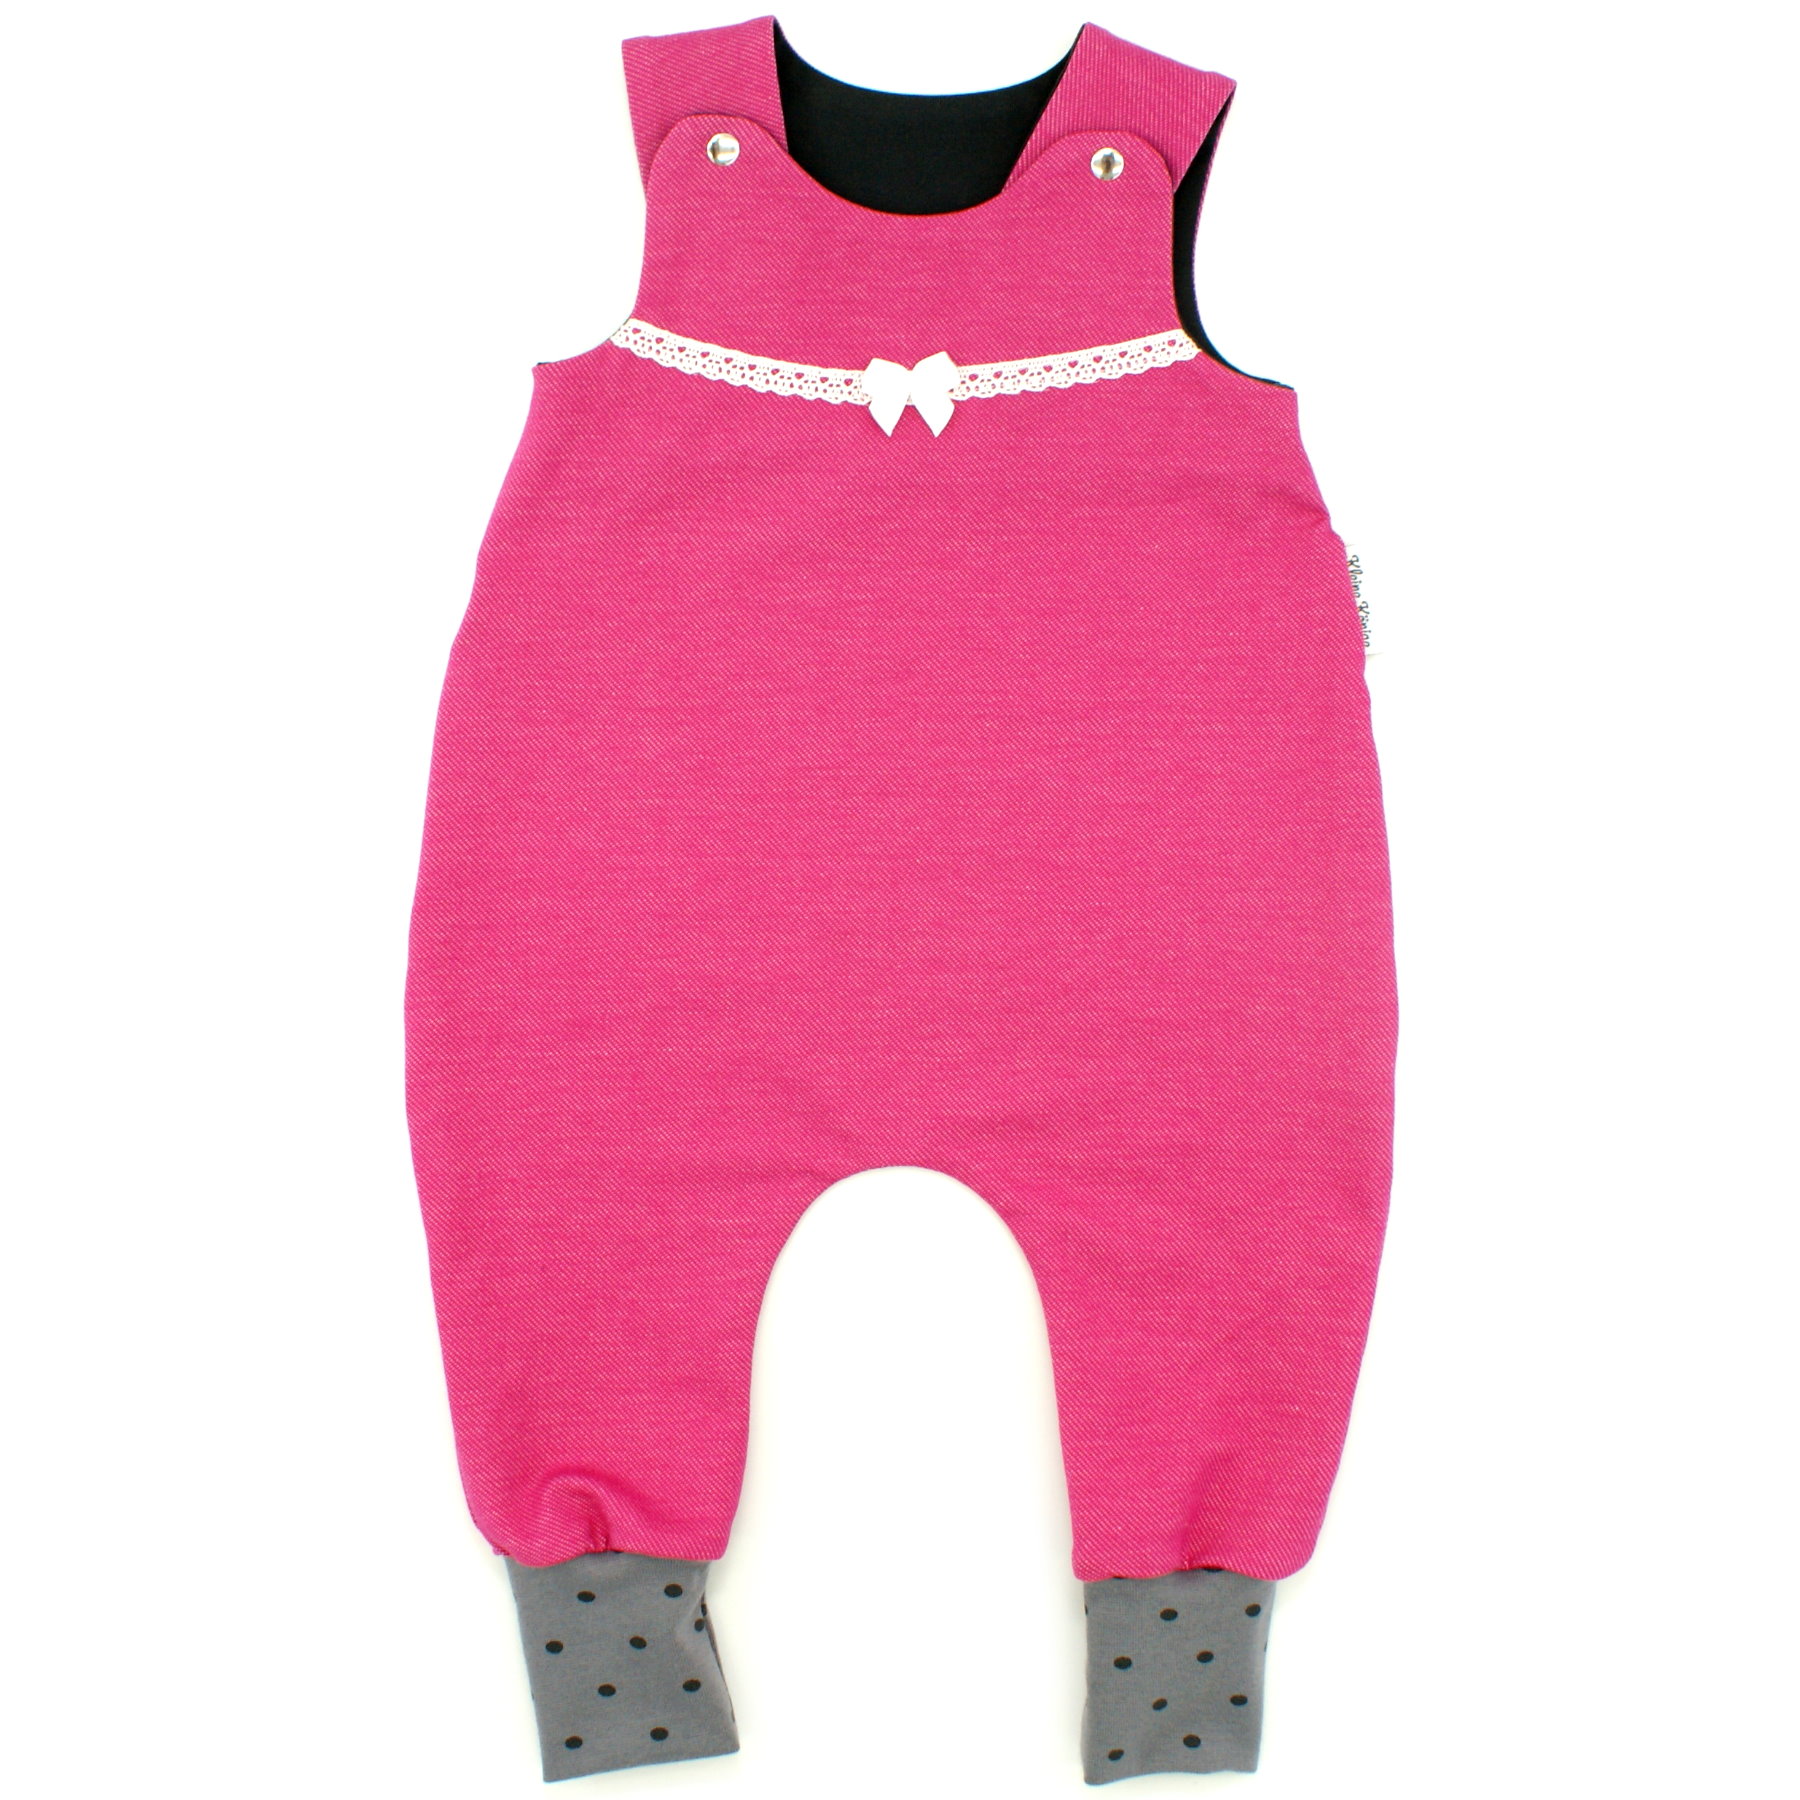 Baby Strampler Jeansjersey pink Punkte grau